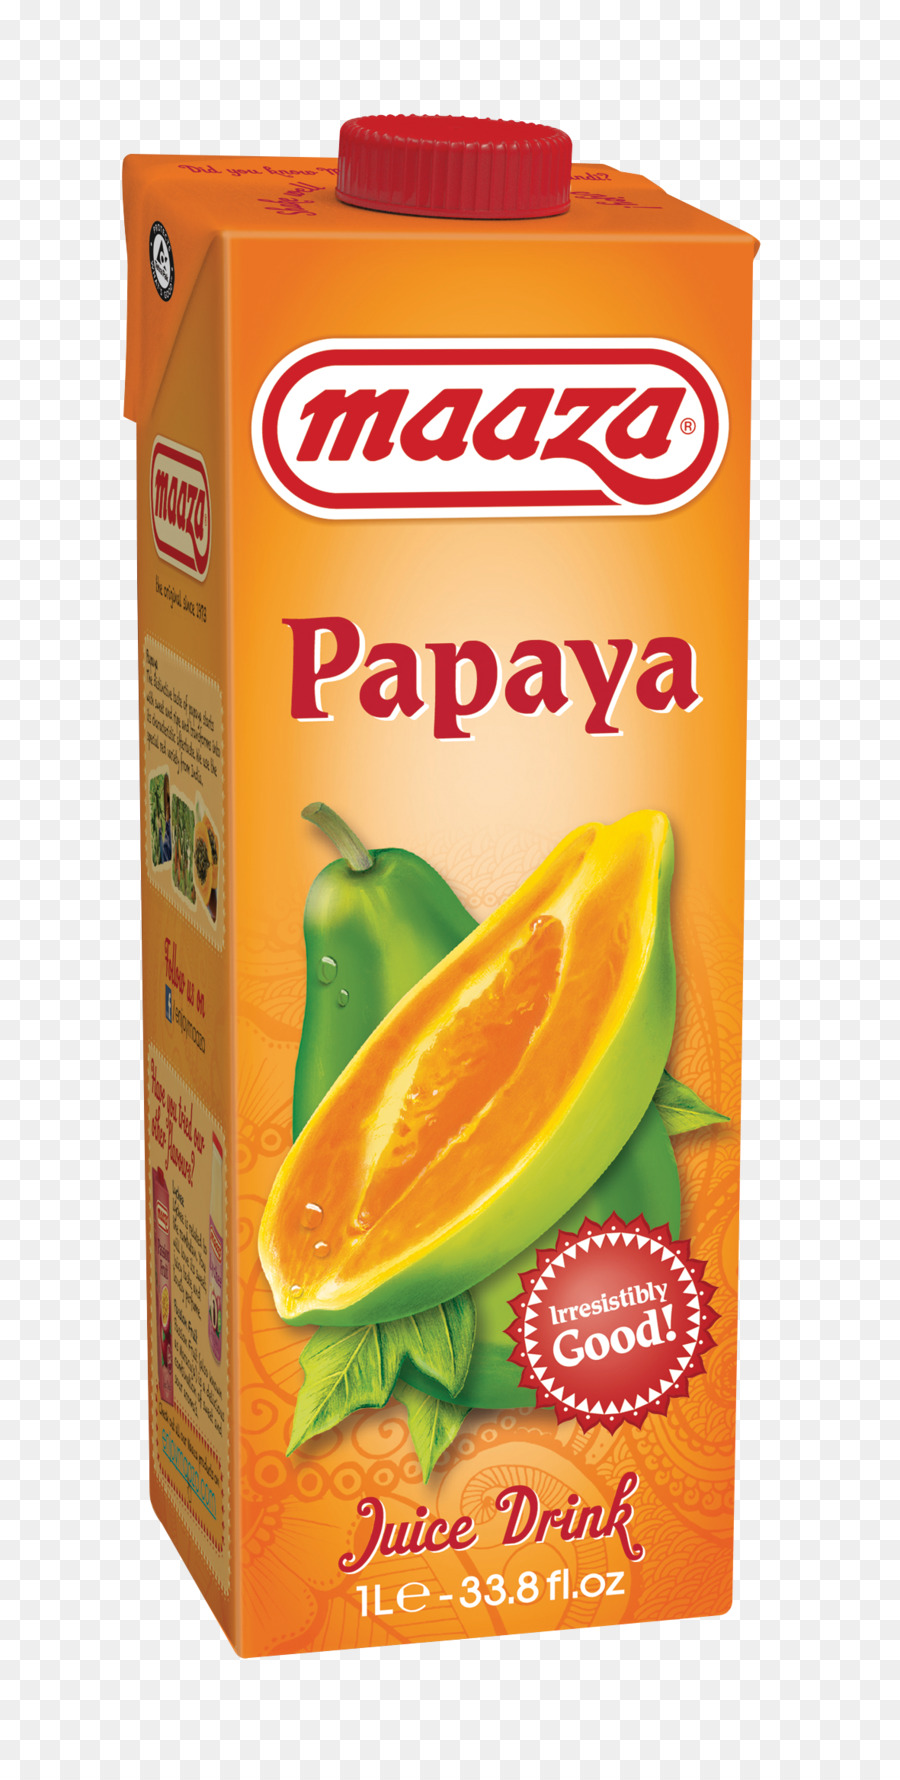 La canna da zucchero succo di Arancia, bere Bevande Gassate Maaza - succo di mango